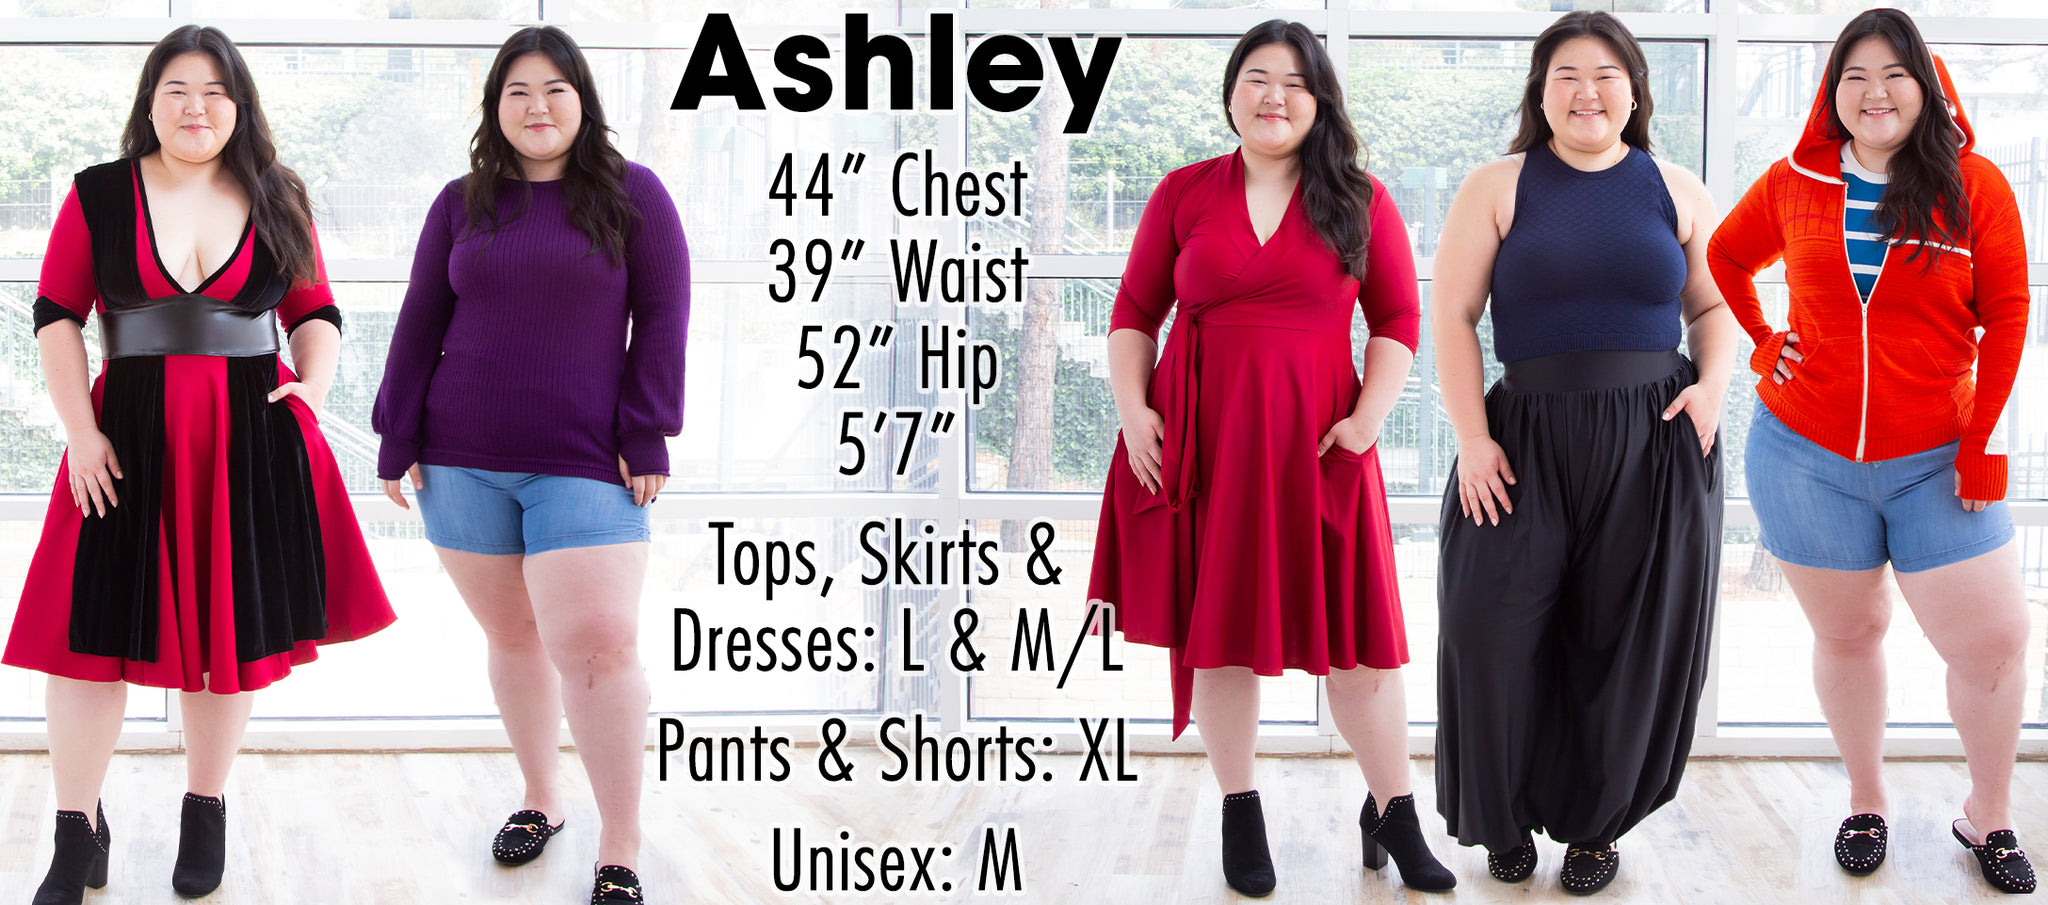 Ashley - 44” Chest 39” Waist 52” Hip 5’7” Height - Tops, Skirts & Dresses: L & M/L - Pants & Shorts: XL Unisex: M